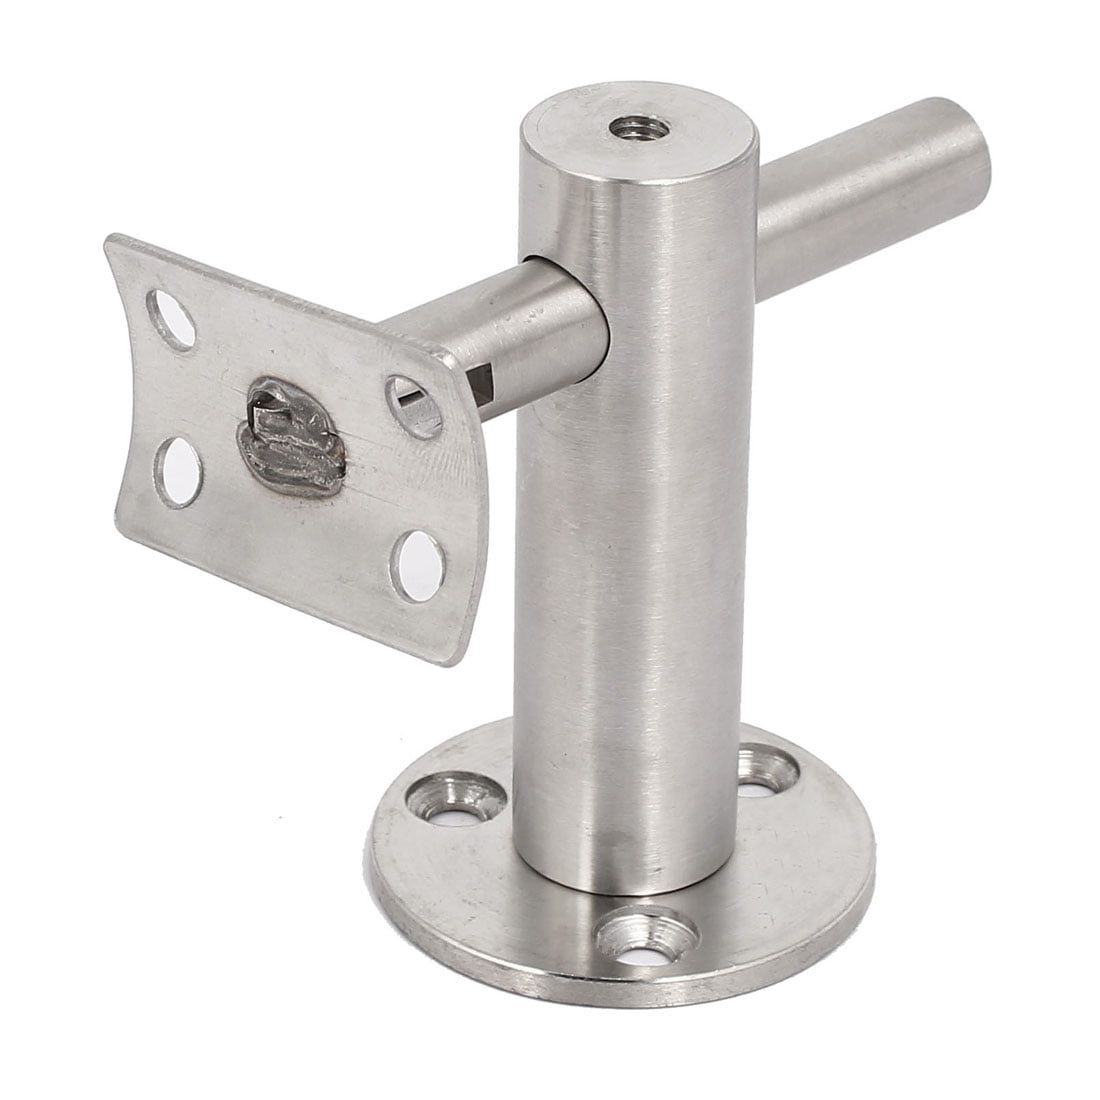 304 Stainless Steel Adjustable Handrail Banister Bracket Support Silver Tone